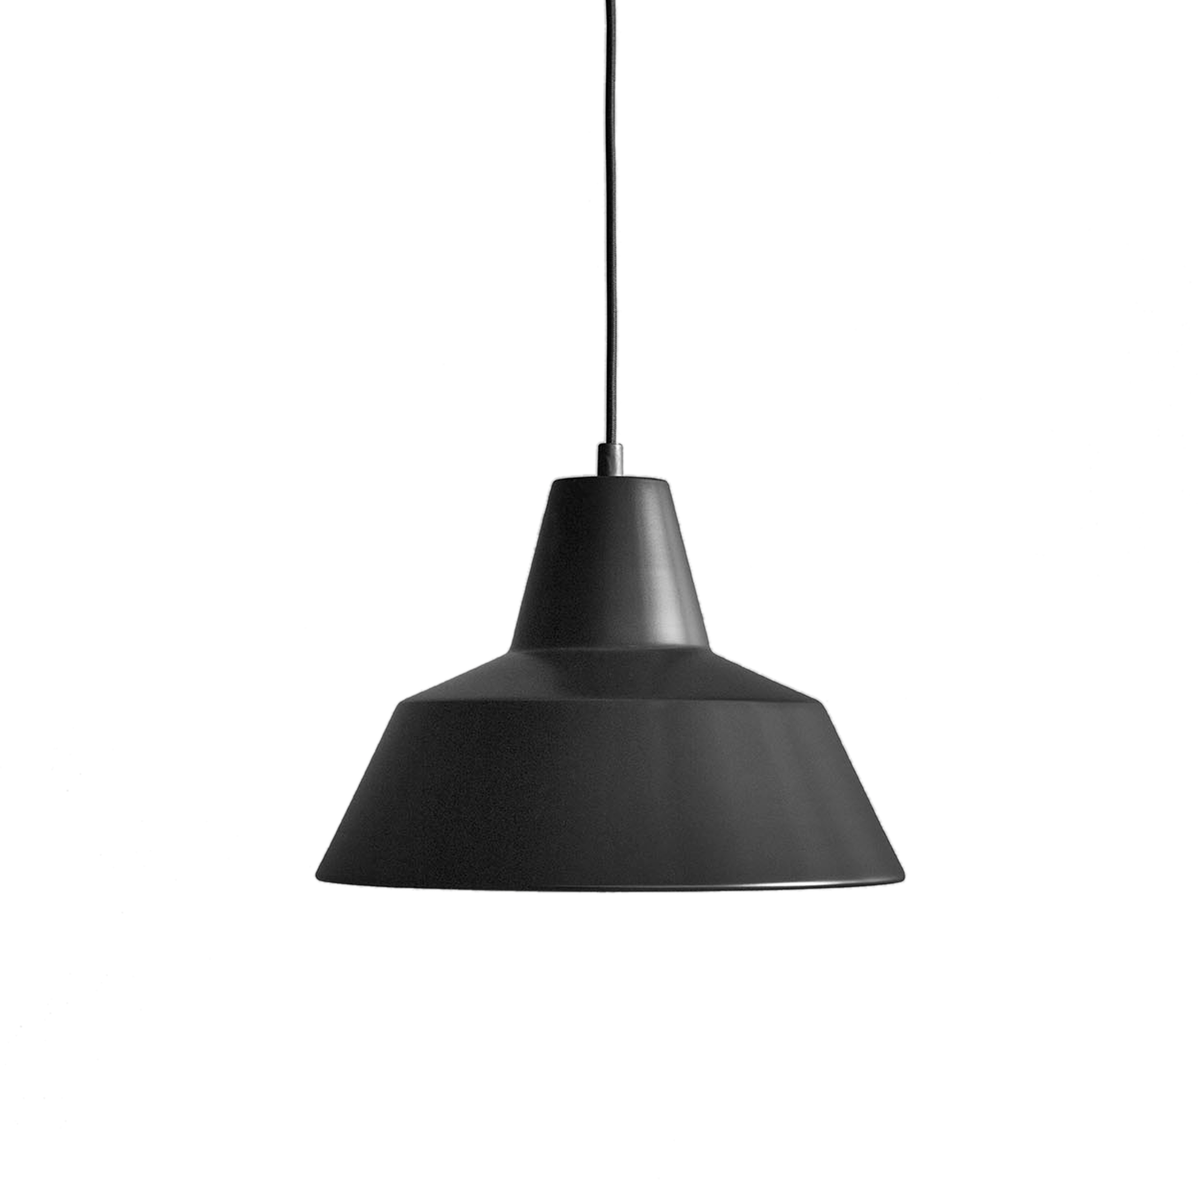 Made by Hand, Workshop Pendant Lamp W3, Matte Black, Pendant, A. Wedel-Madsen,